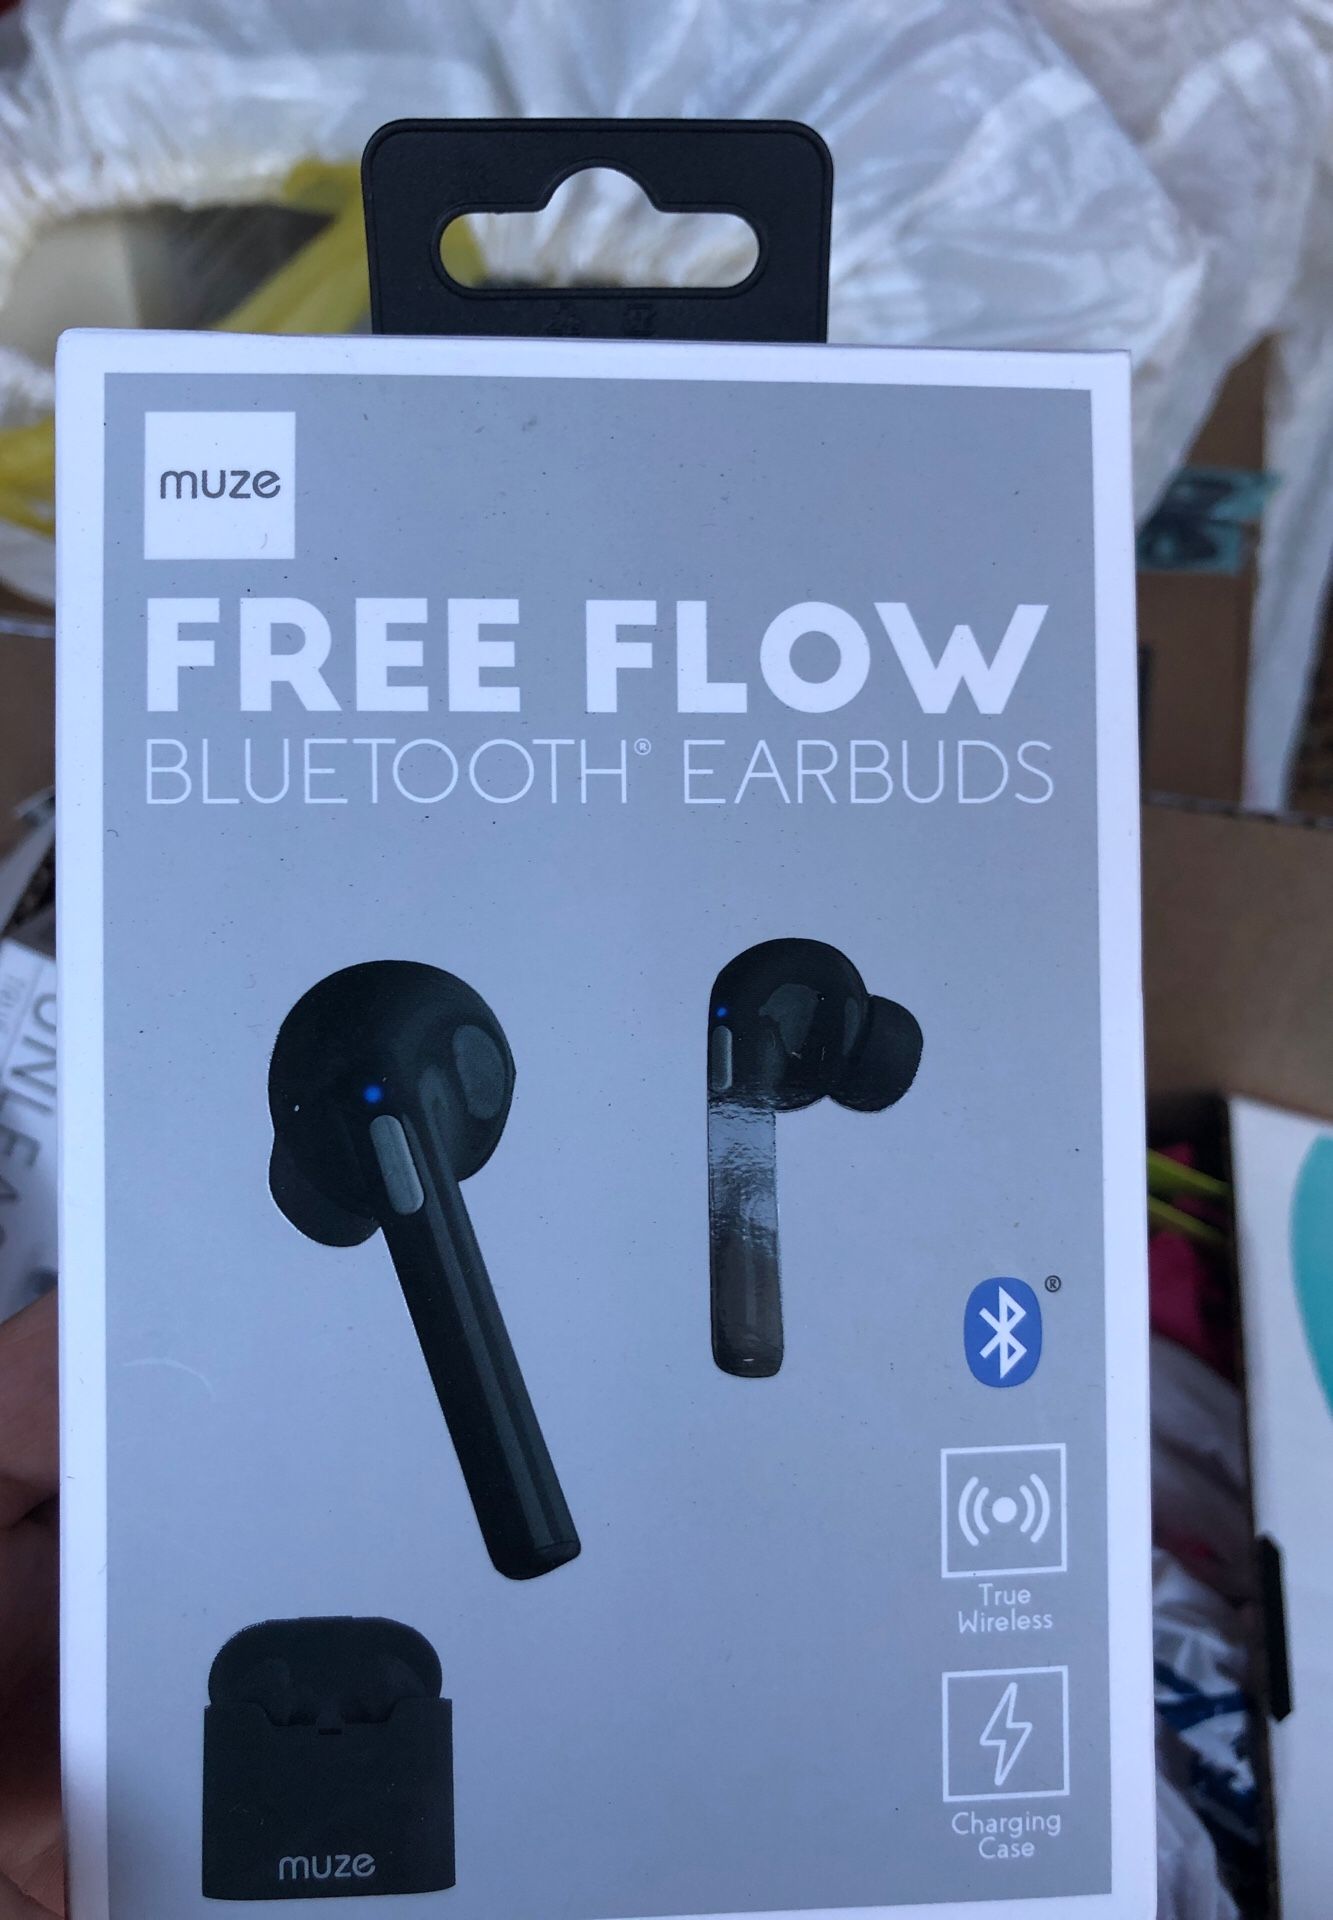 Blk free flow Bluetooth earbuds muze